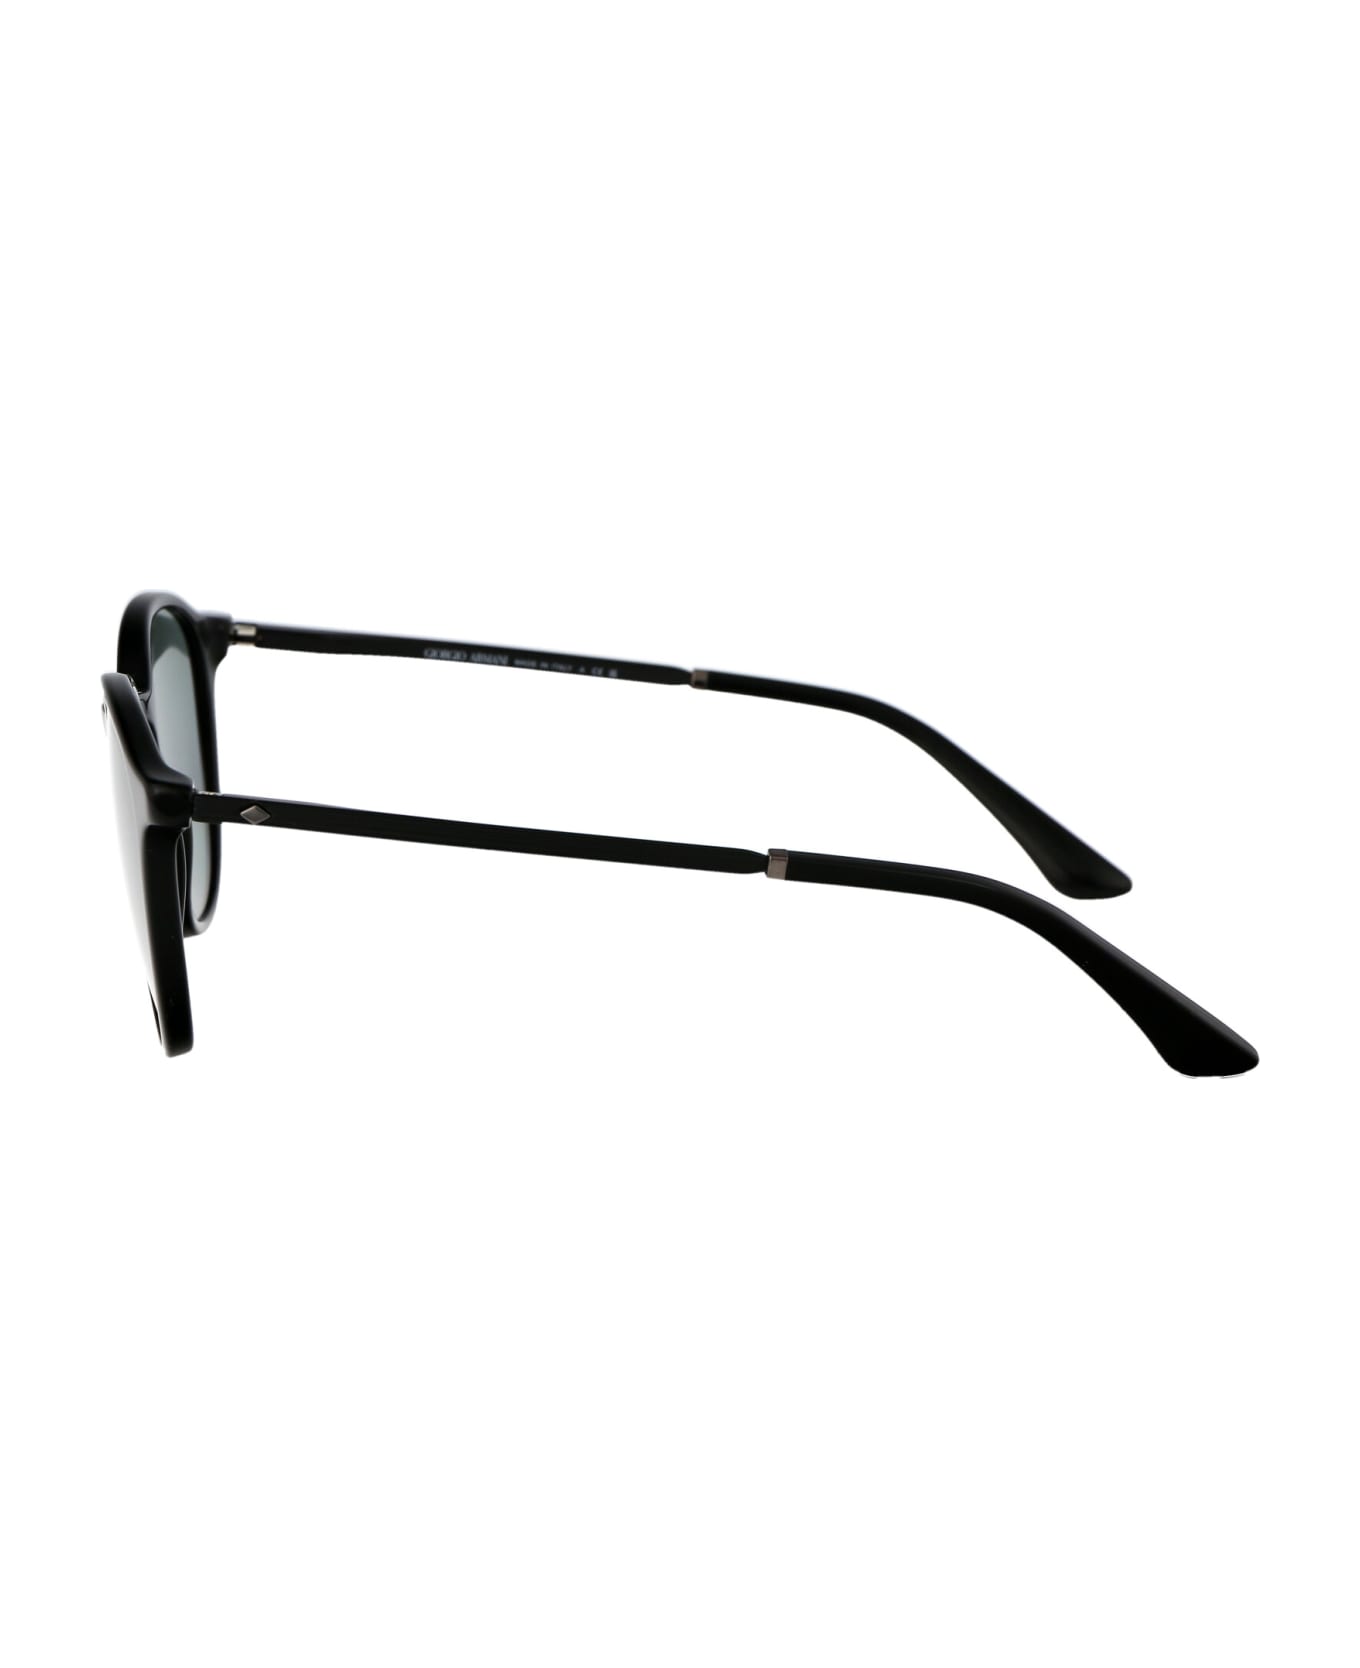 Giorgio Armani 0ar8196 Sunglasses - 5001/1 Black